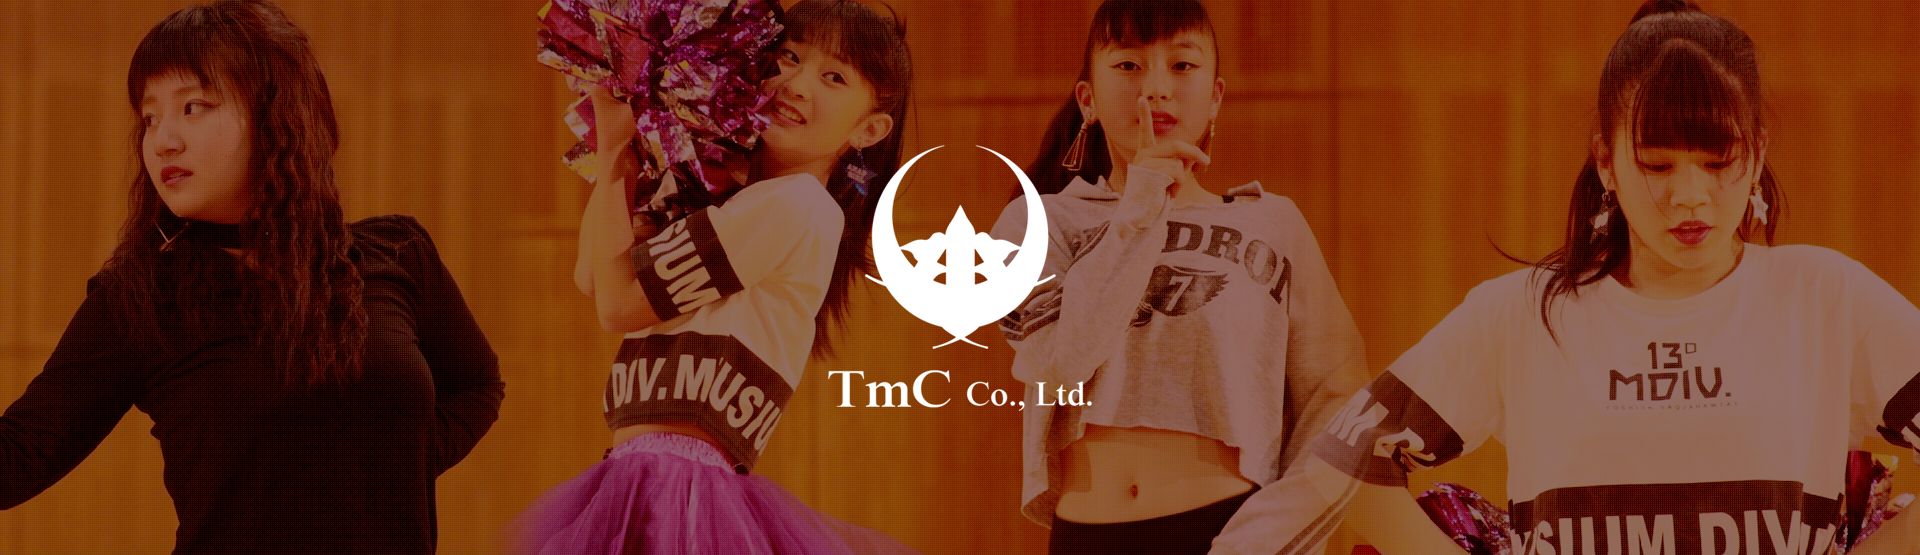 TmC Co., Ltd.